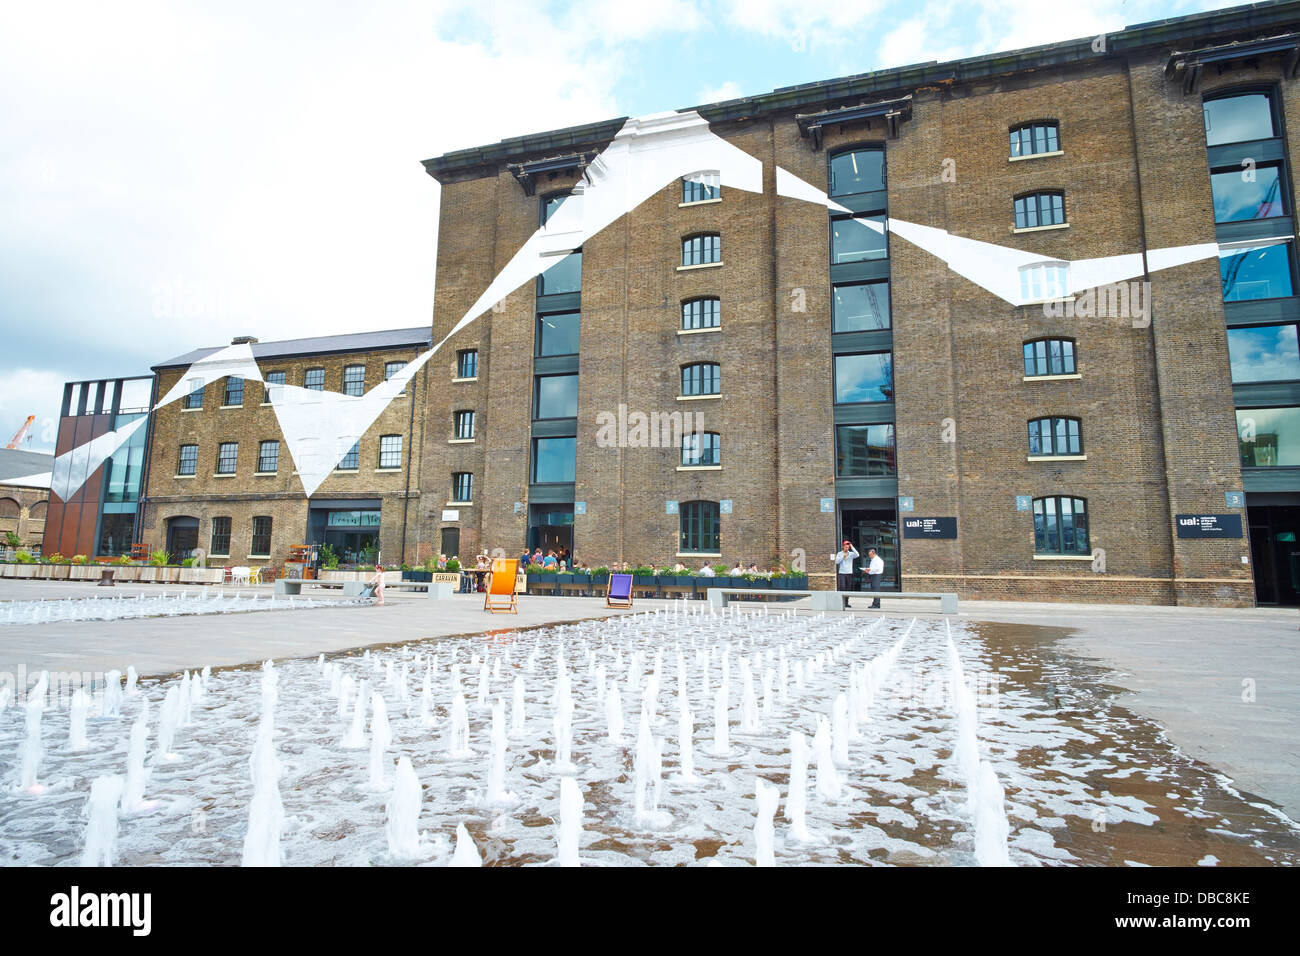 University of Arts London, Central Saint Martins (new location), King's  Cross, London, UK Stock Photo - Alamy